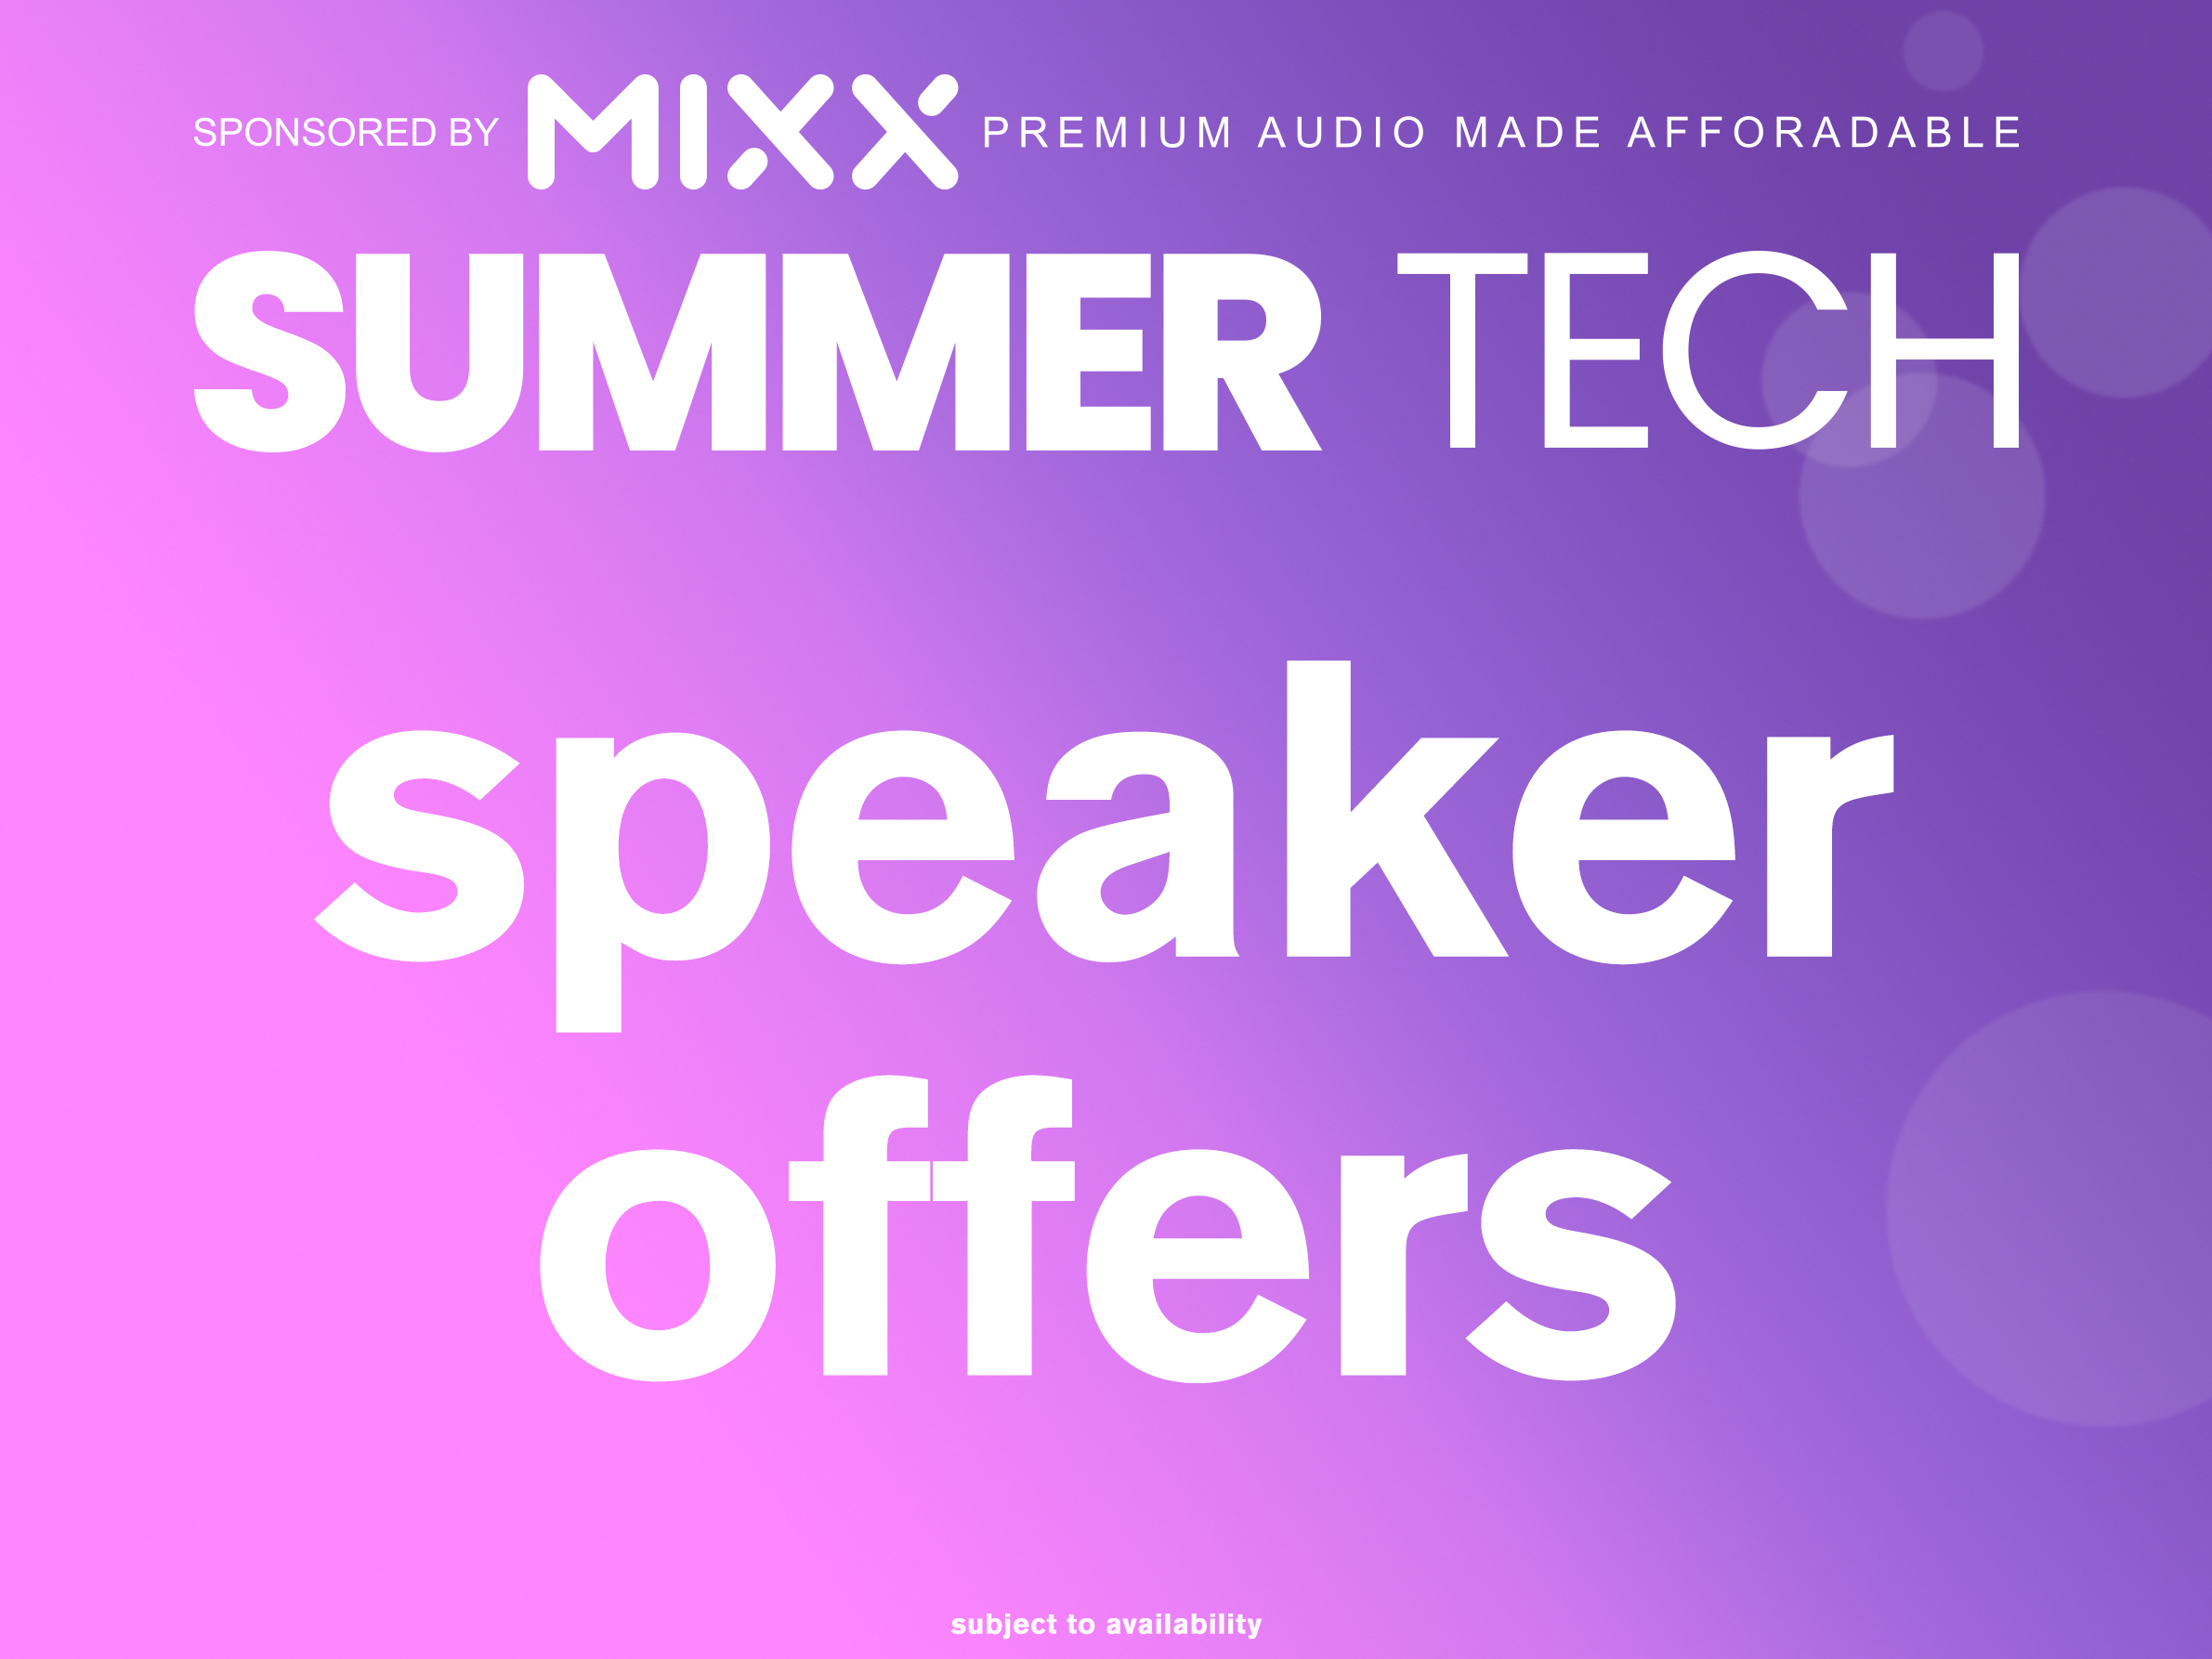 Summer Tech - Speaker Offers